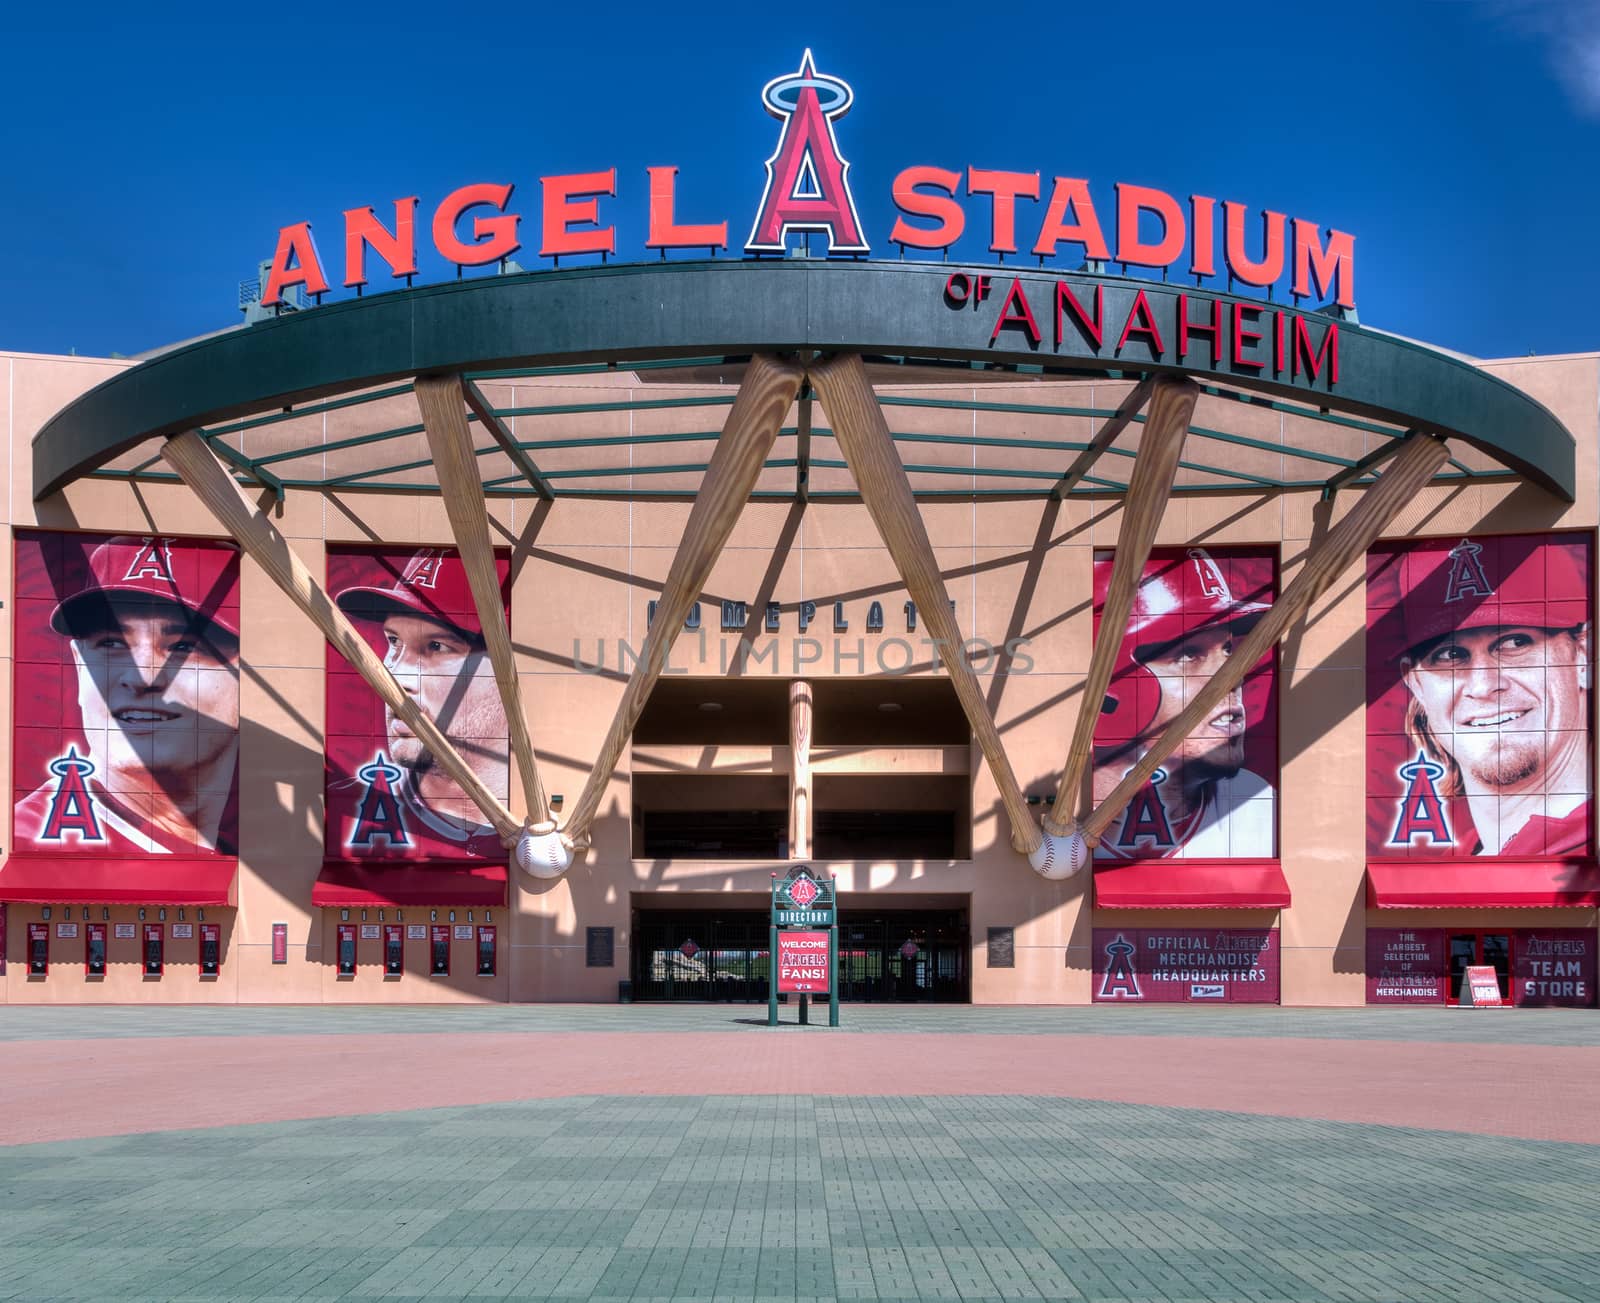 Angel Stadium of Anaheim Entrance by wolterk